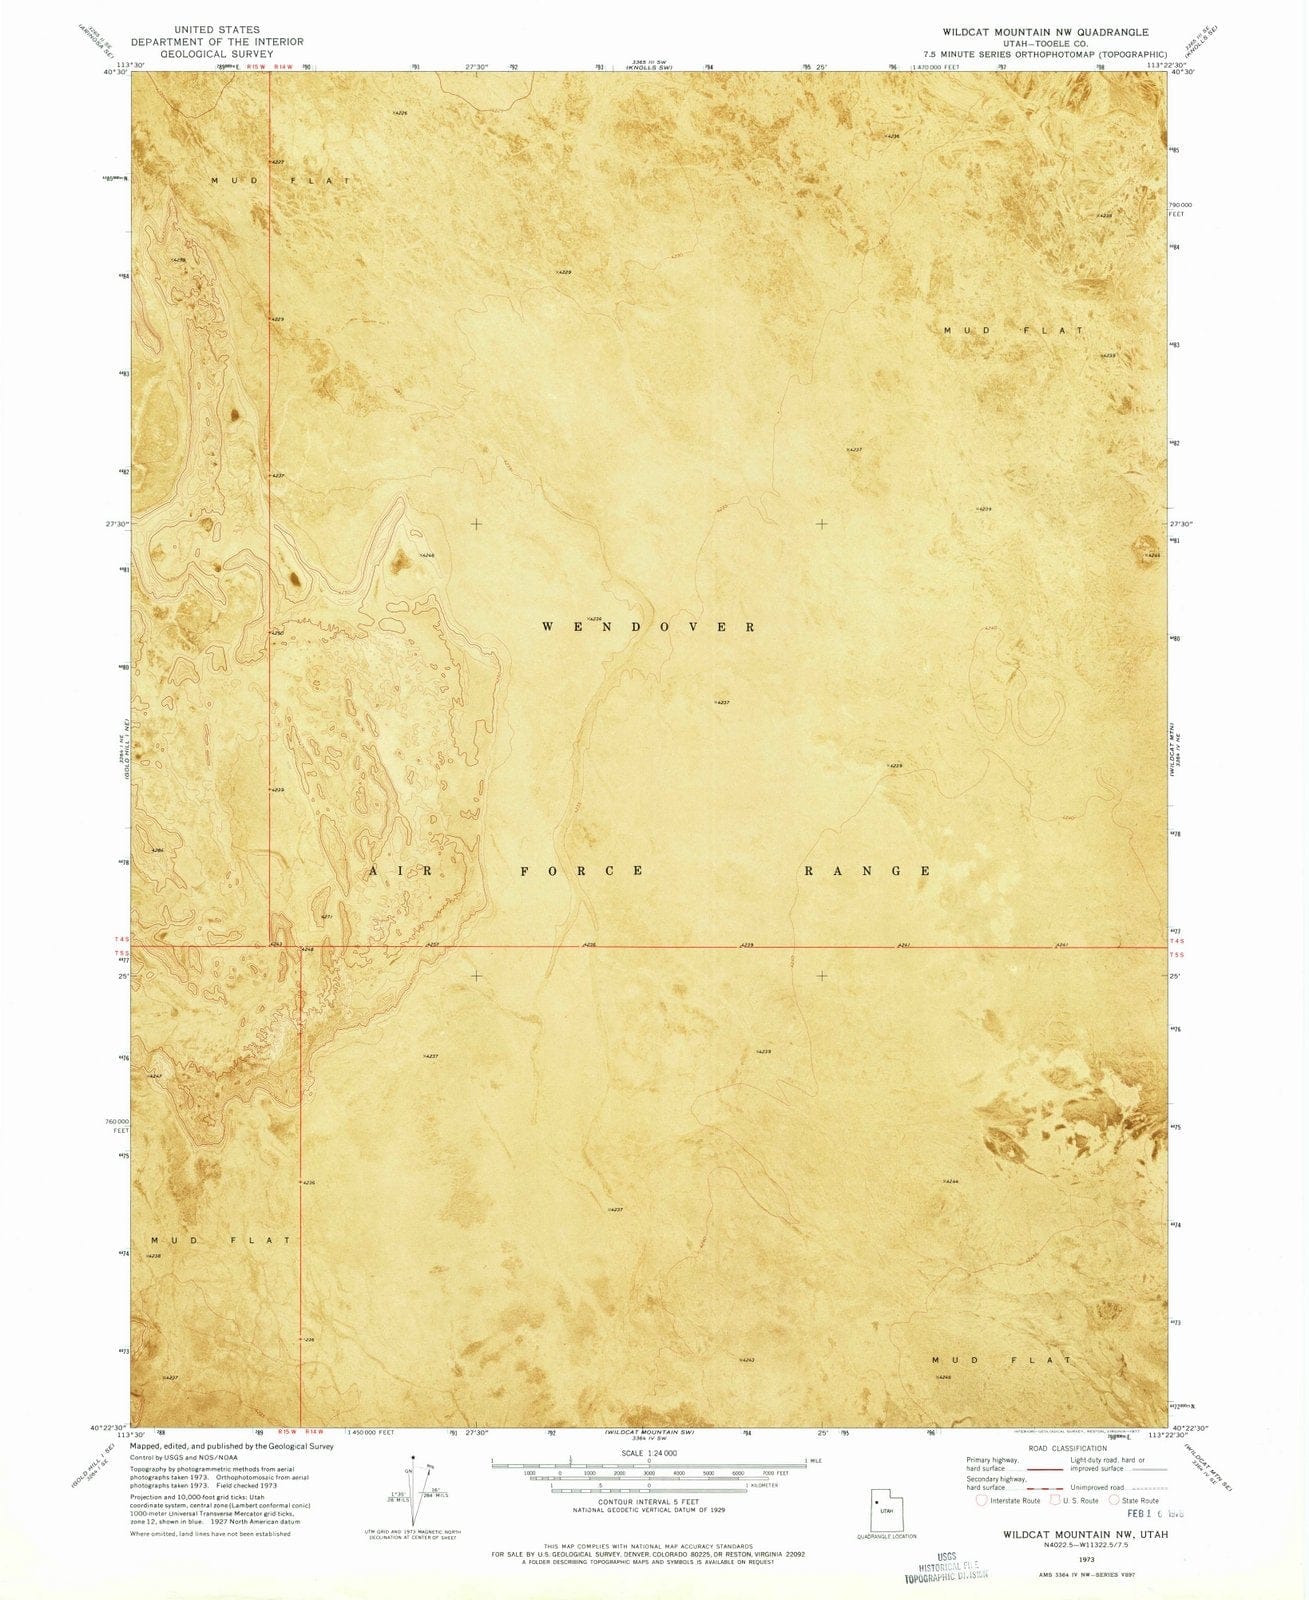 1973 Wildcat Mountain, UT - Utah - USGS Topographic Map